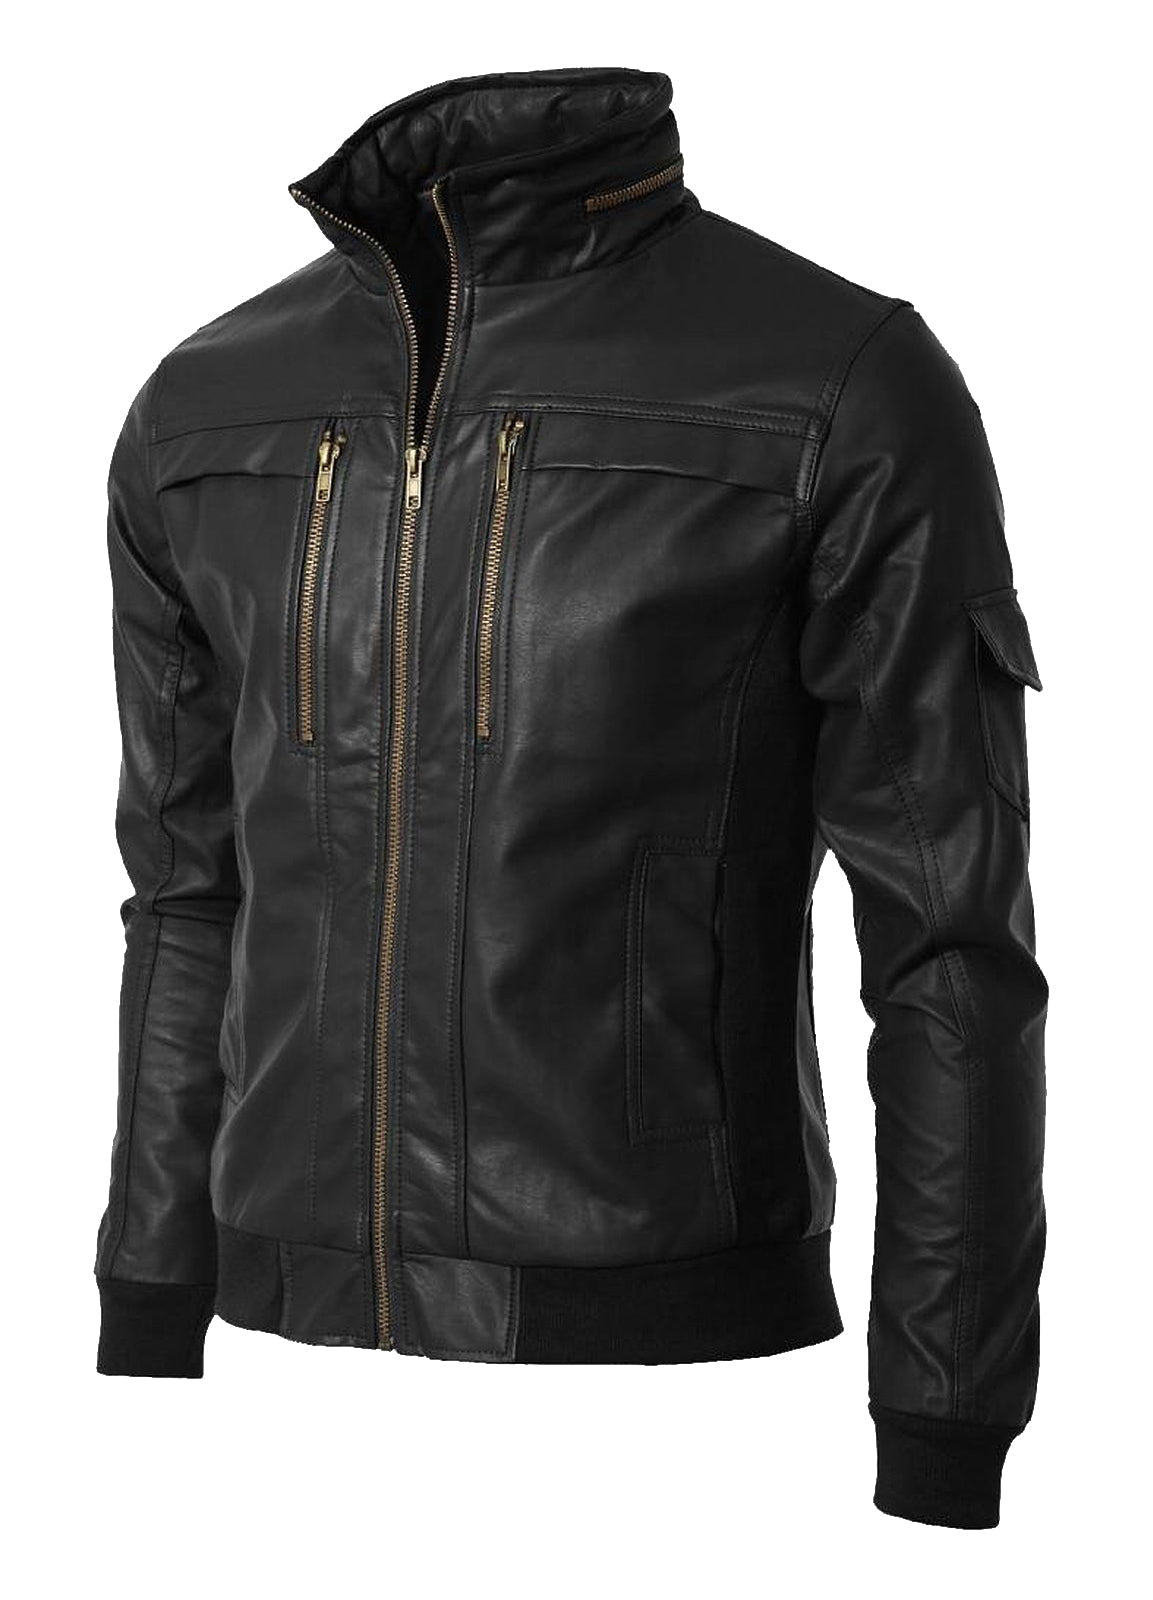 Leather Jackets Hub Mens Genuine Cowhide Leather Jacket (Black, Bomber Jacket) - 1501213